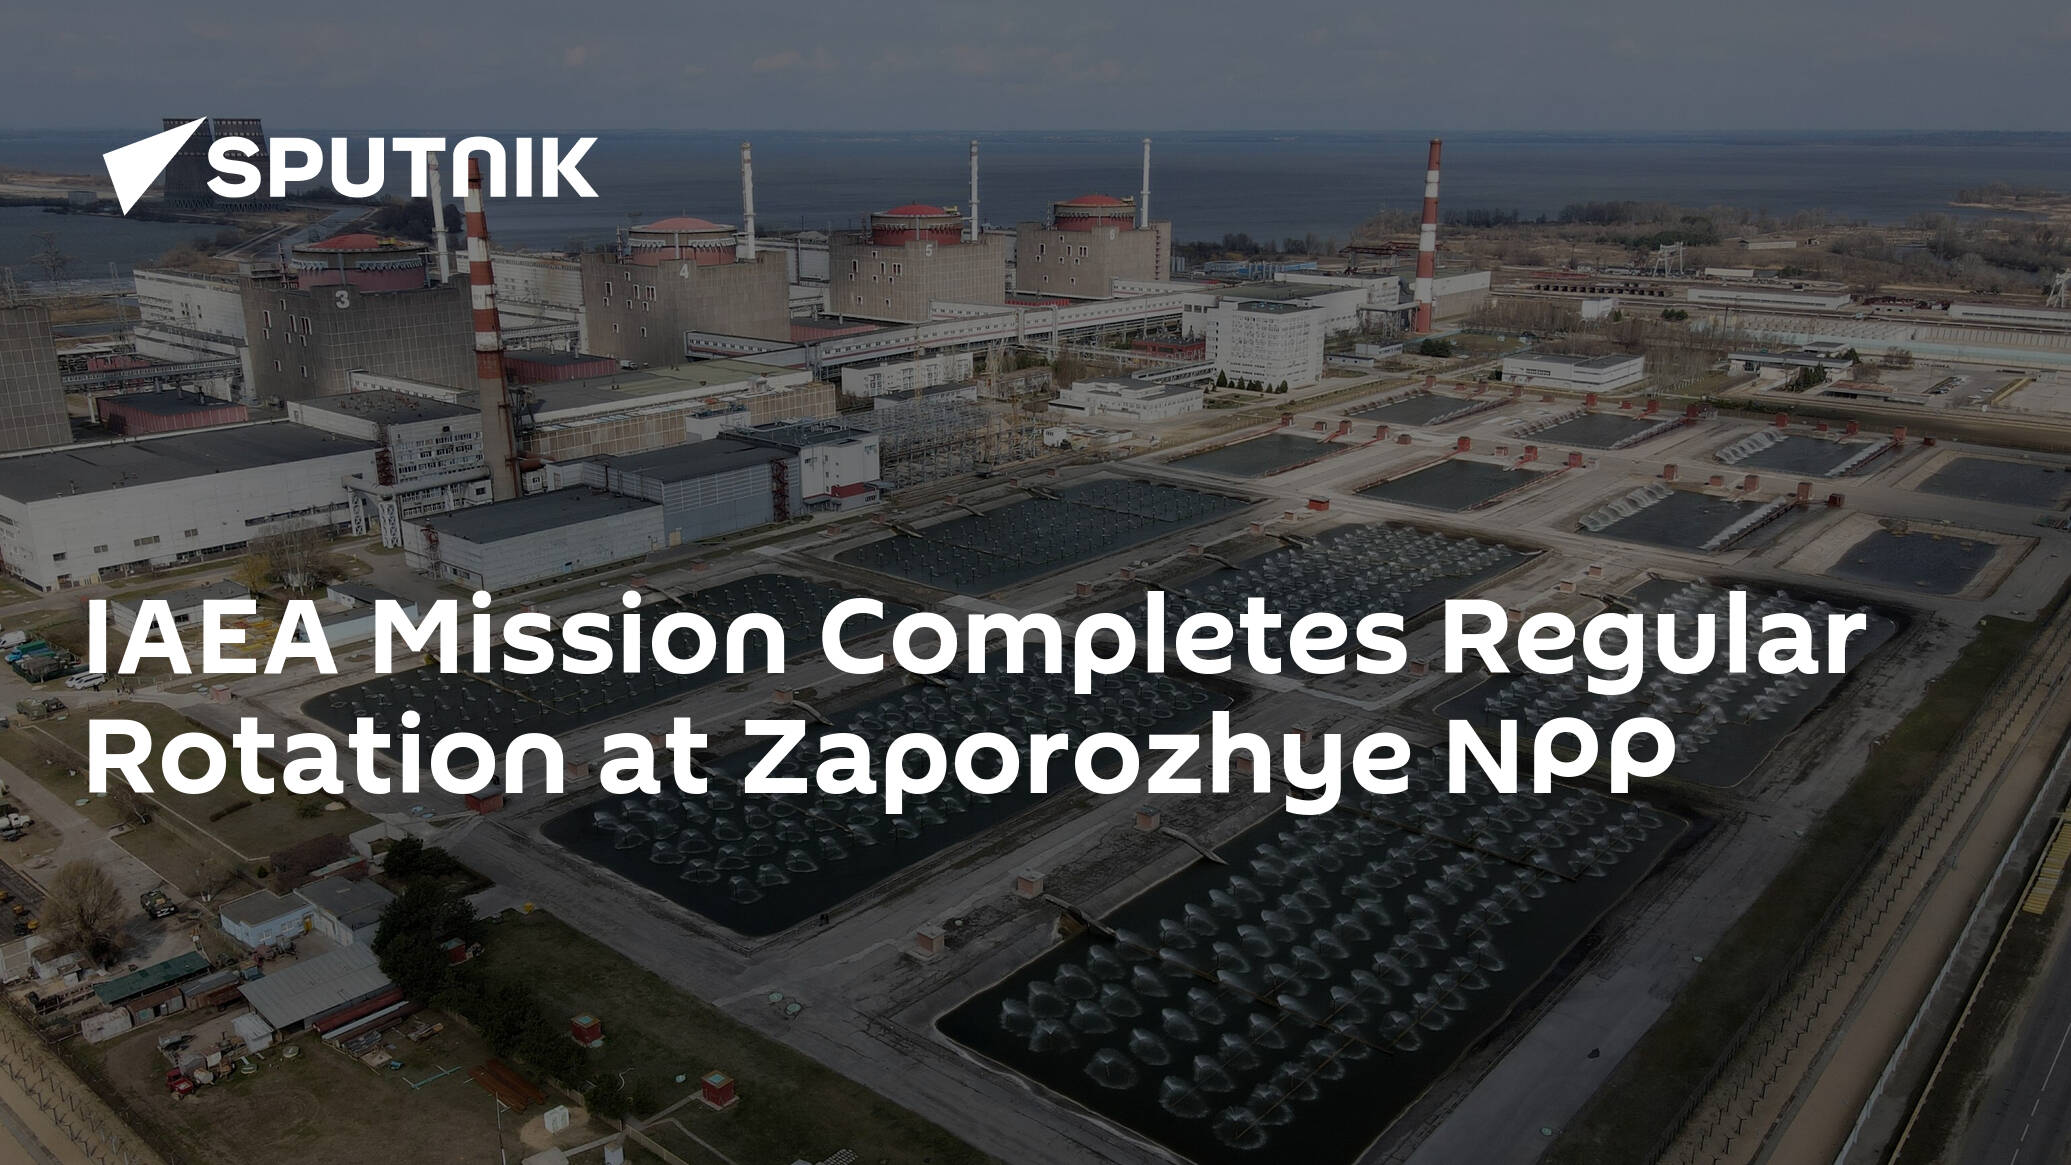 IAEA Mission Completes Regular Rotation at Zaporozhye NPP